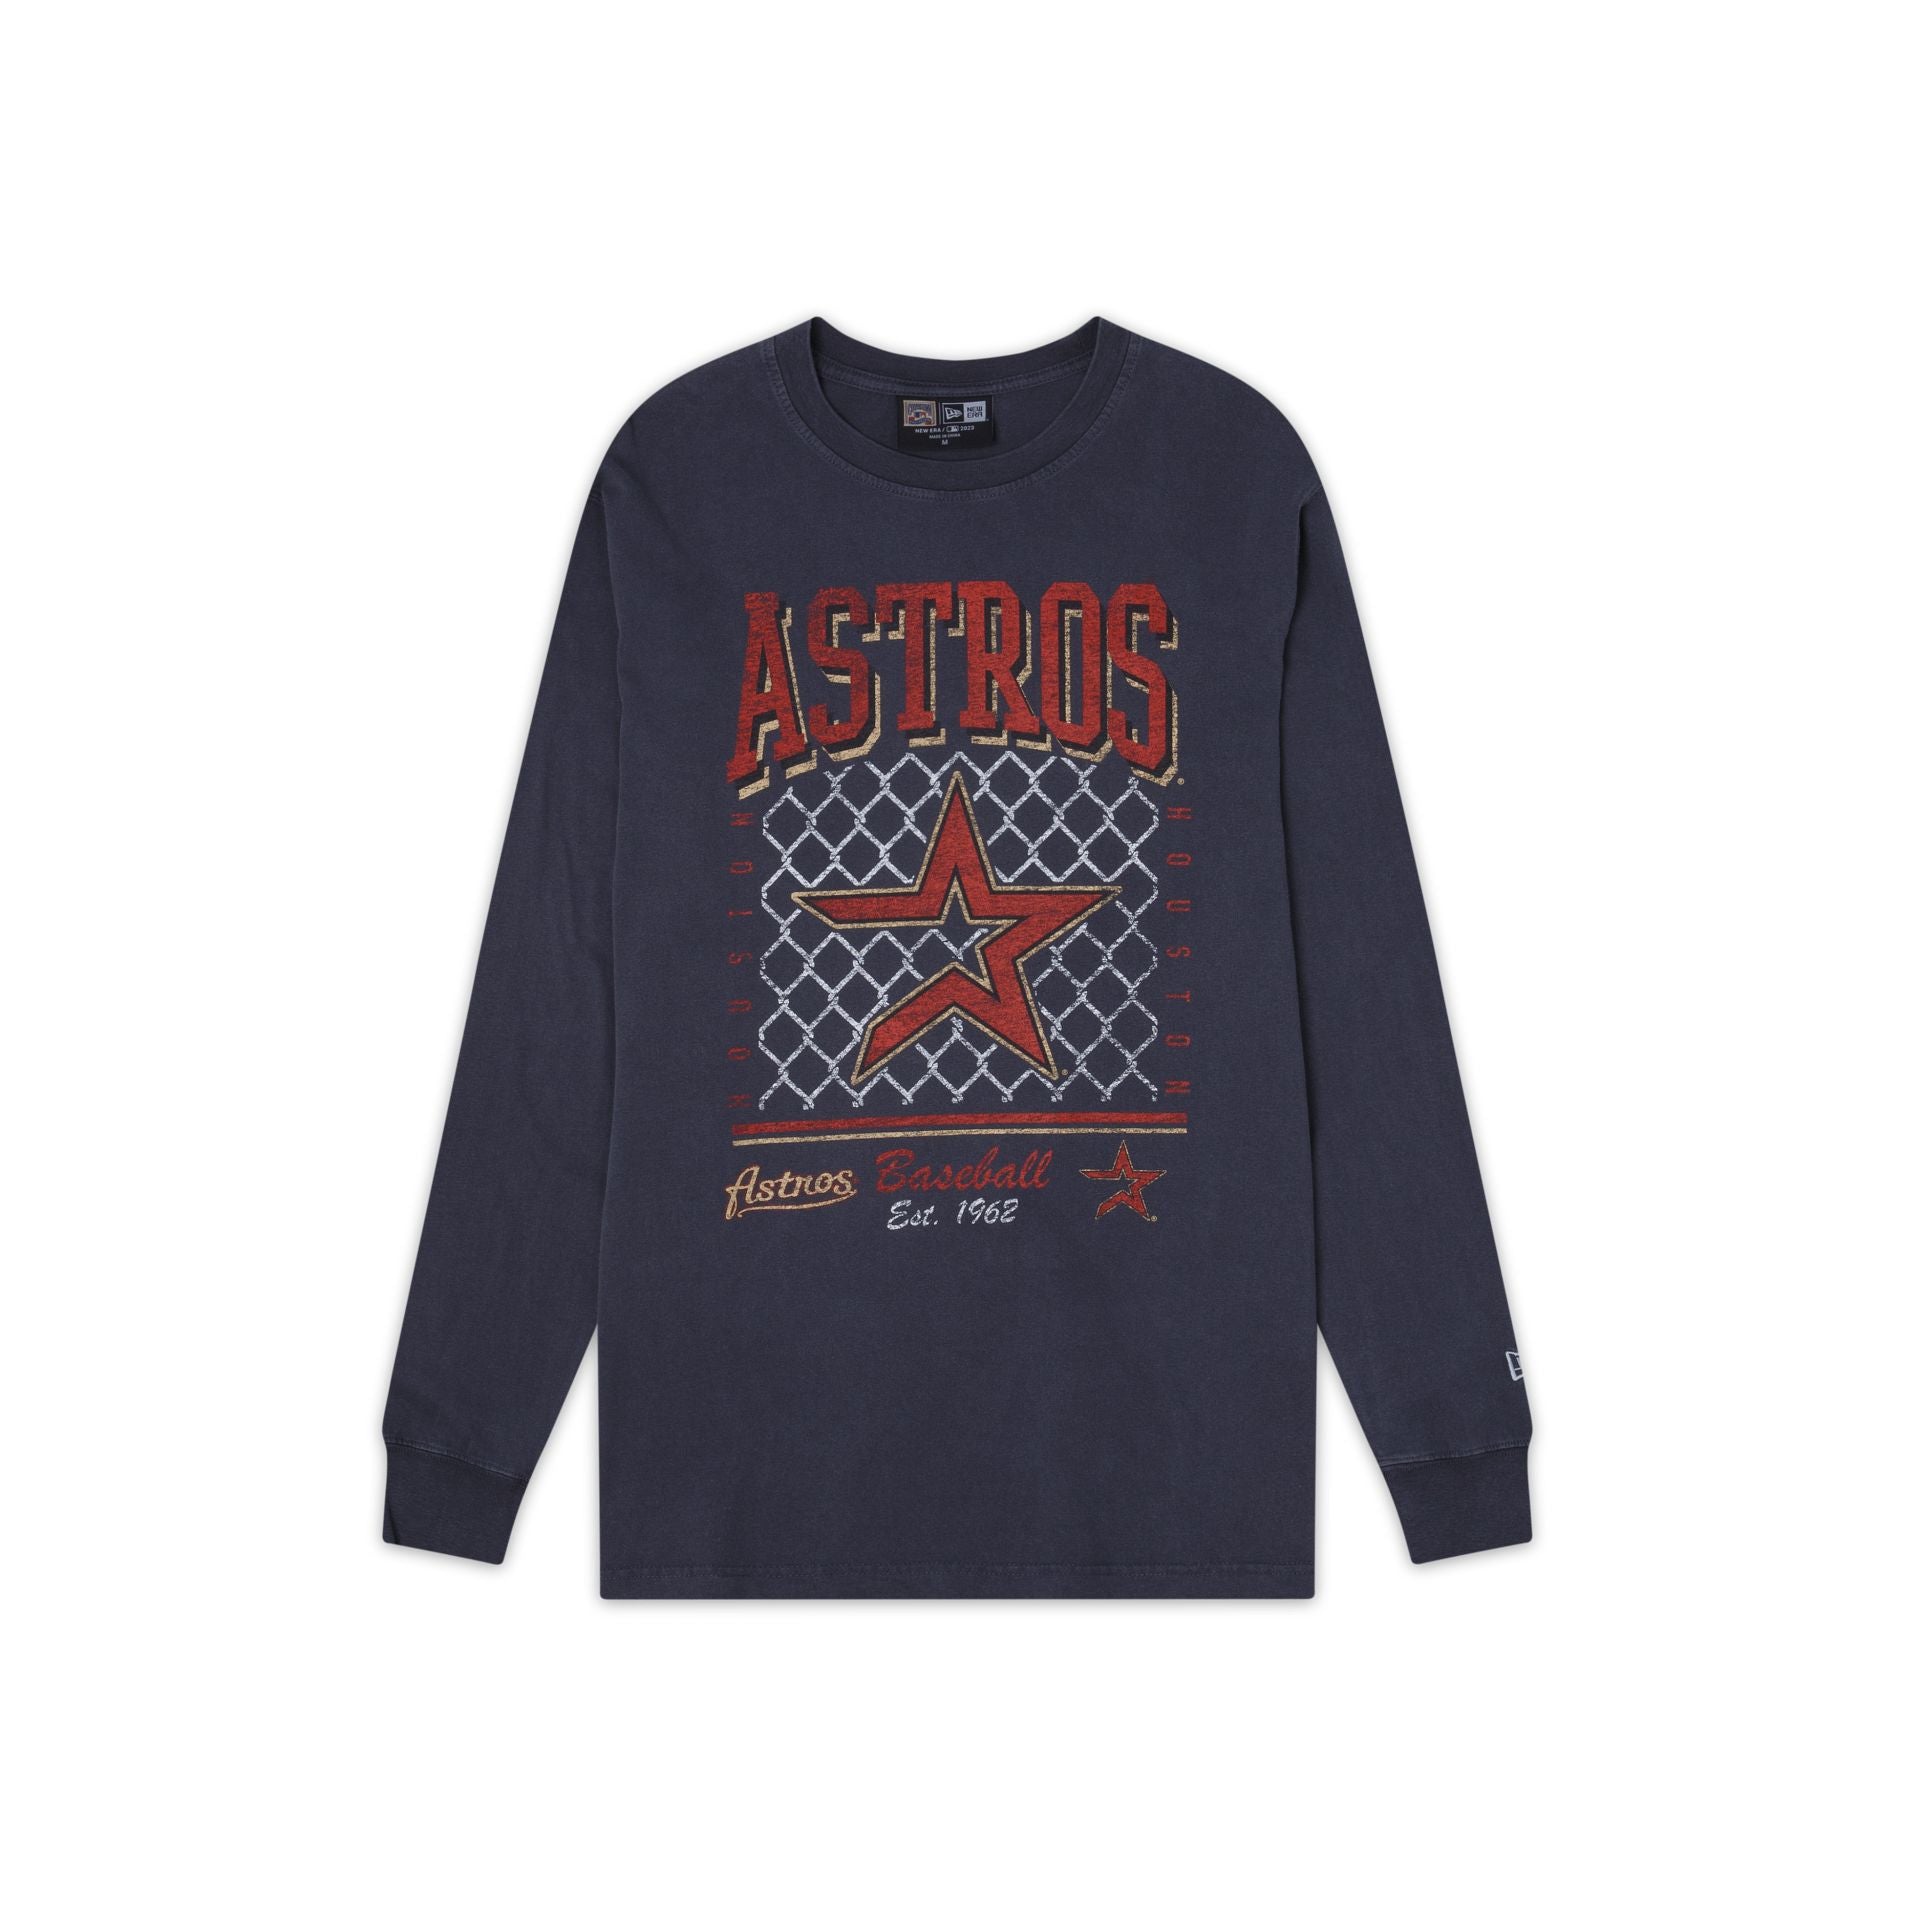 Vintage Astros Name Throwback Retro Apparel Gift Men Women T-Shirt